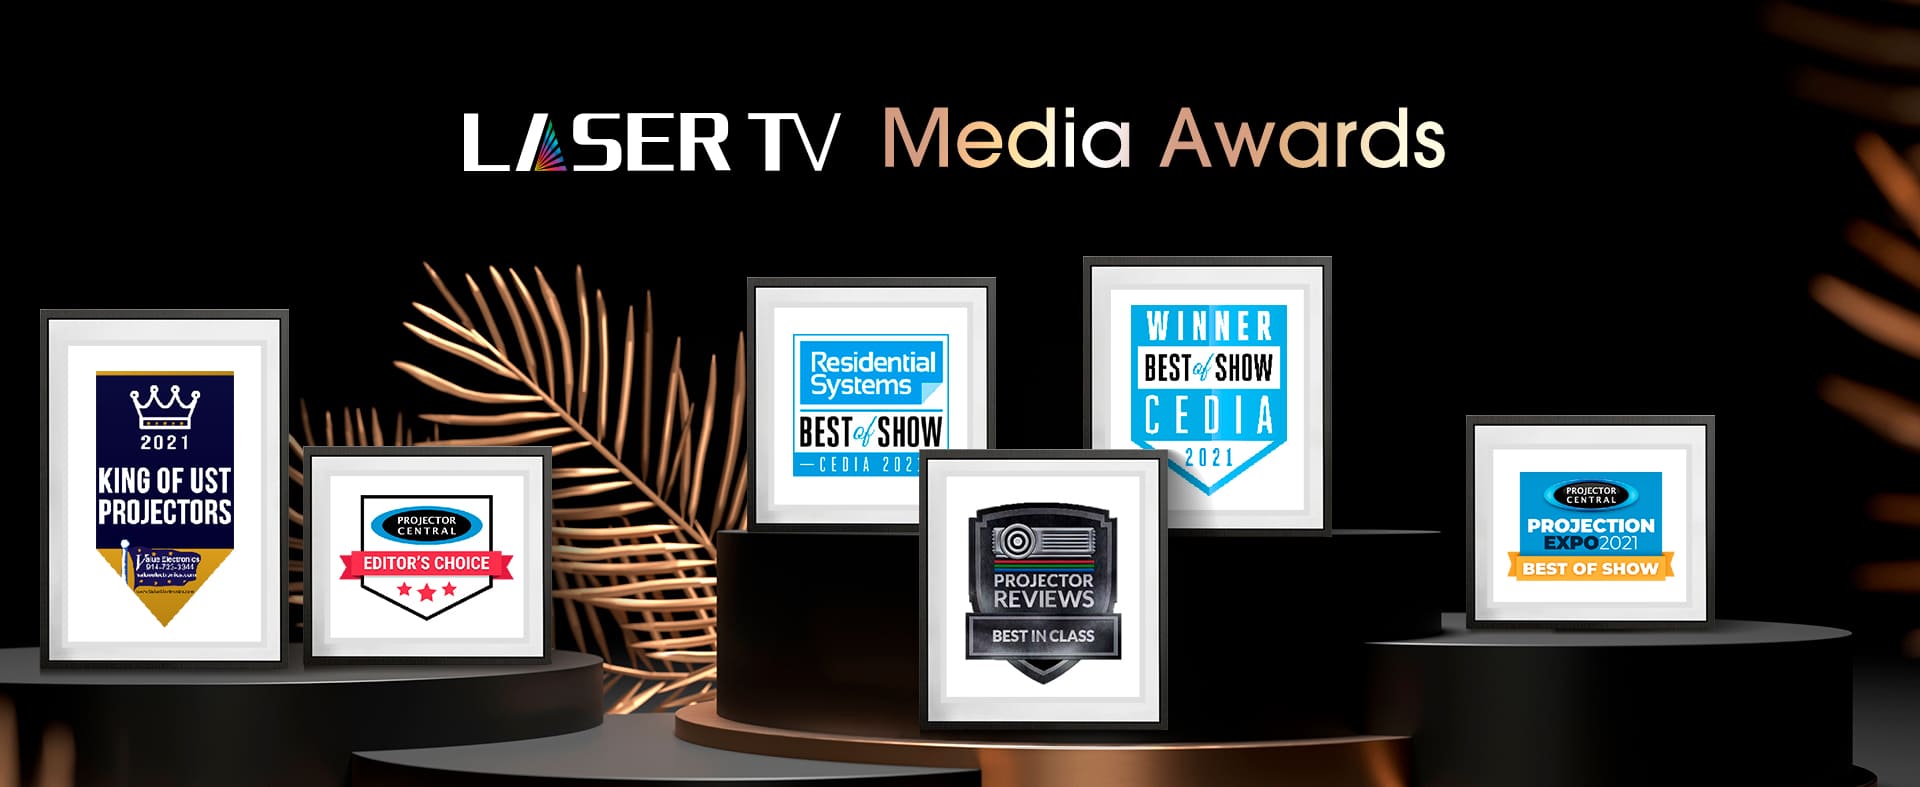 Premios Laser TV